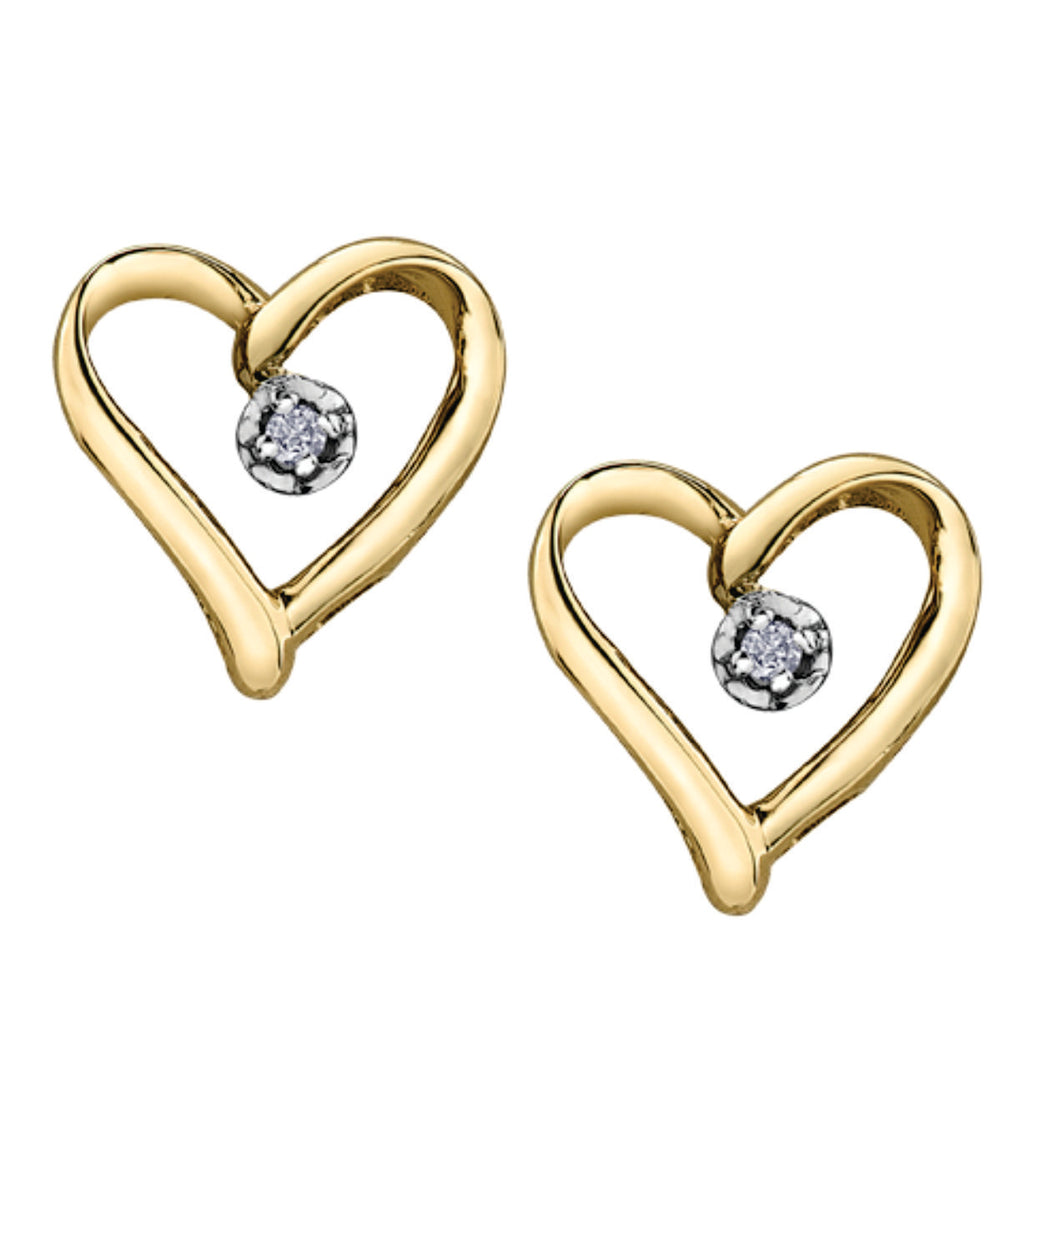 151004 10K Yellow Gold 0.015CT TW Diamond Heart Stud Earrings